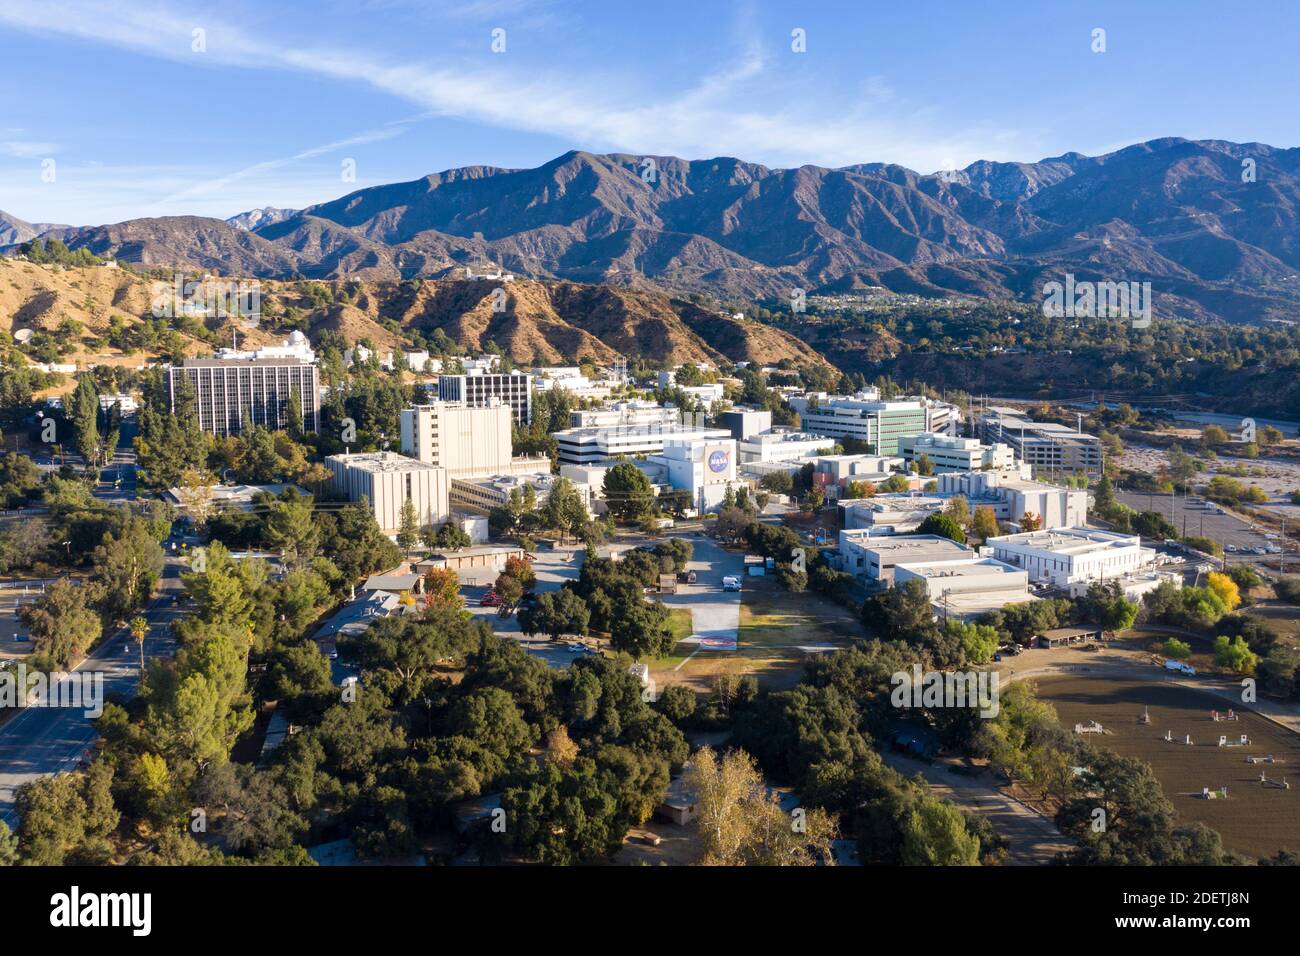 Aerial view of the NASA JPL, Jet Propulsion Laboratory in the foothills above Pasadena California (in La Canada Flintridge) Stock Photo